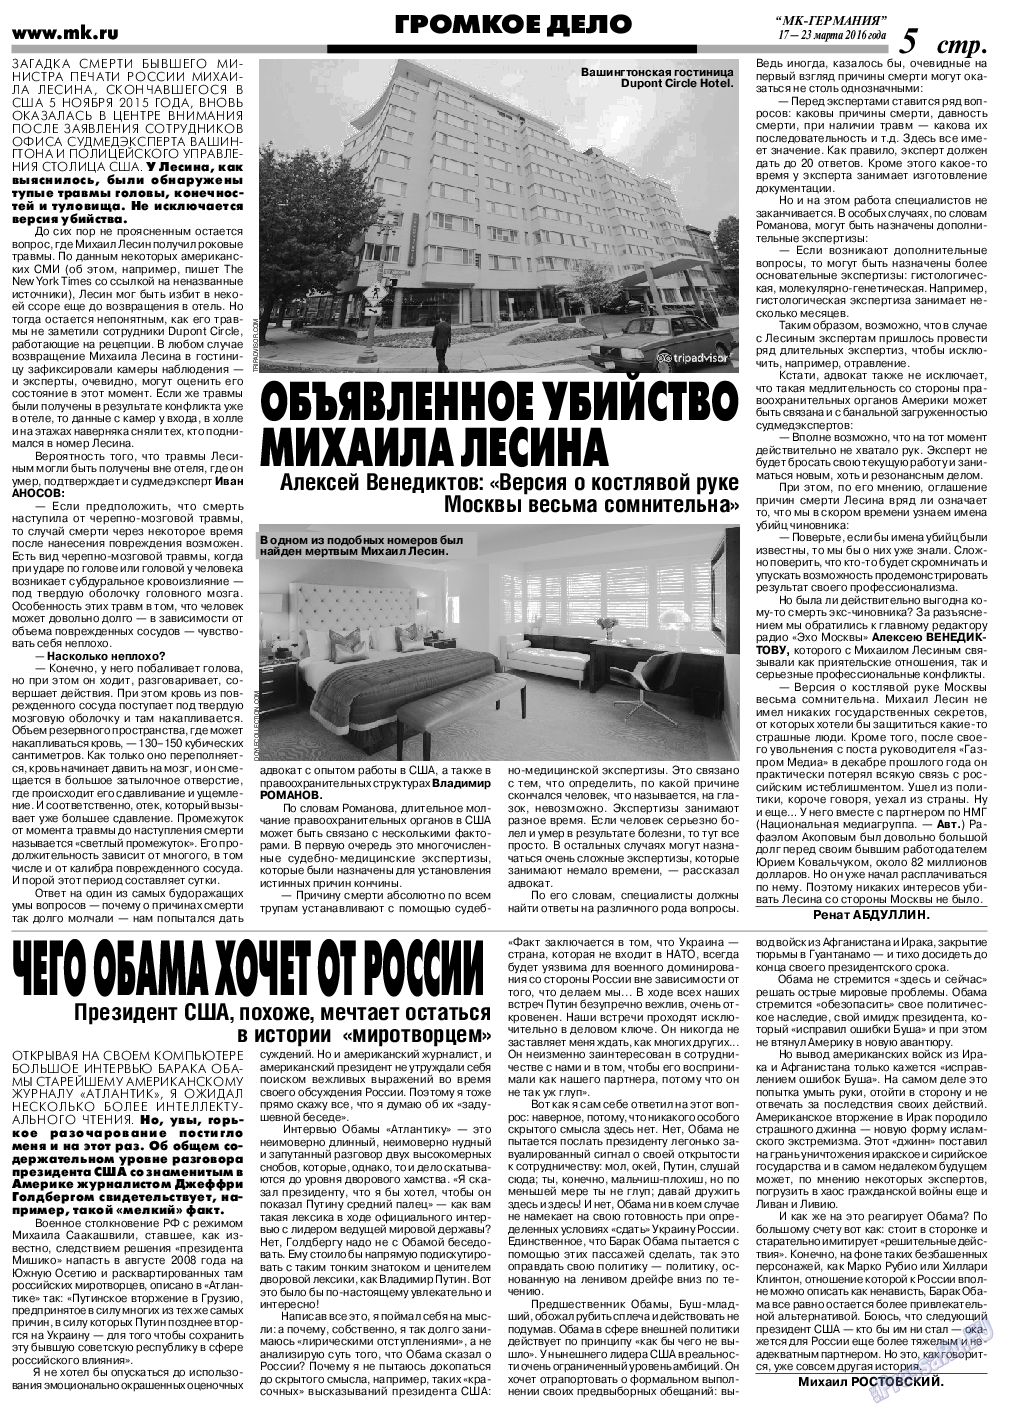 МК-Германия, газета. 2016 №12 стр.5